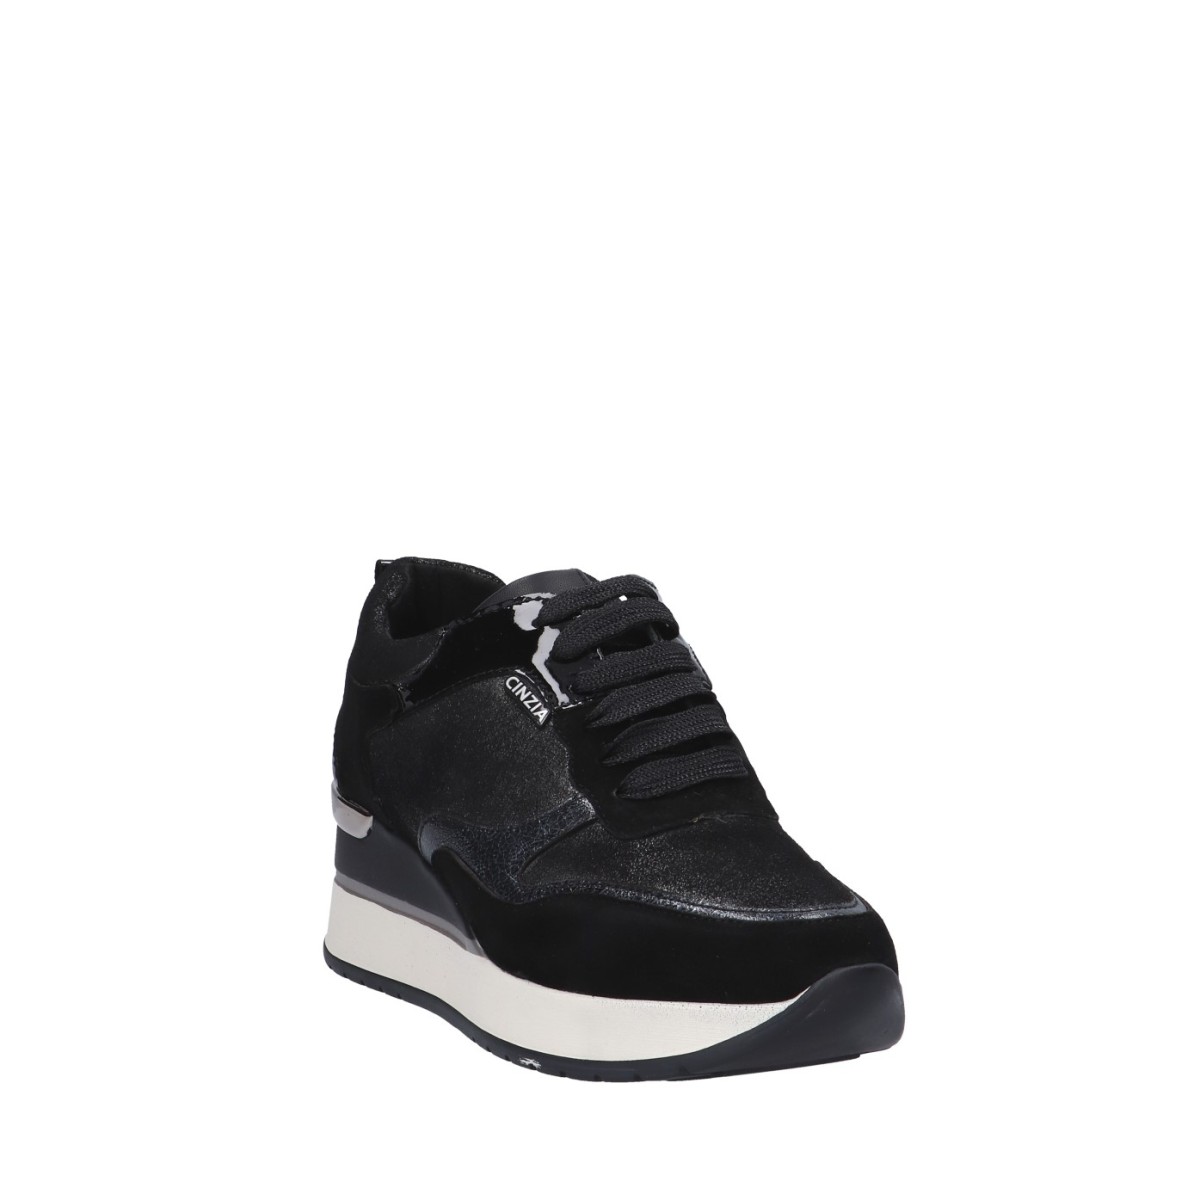 Cinzia soft Sneaker Nero Zeppa IV2520319 001